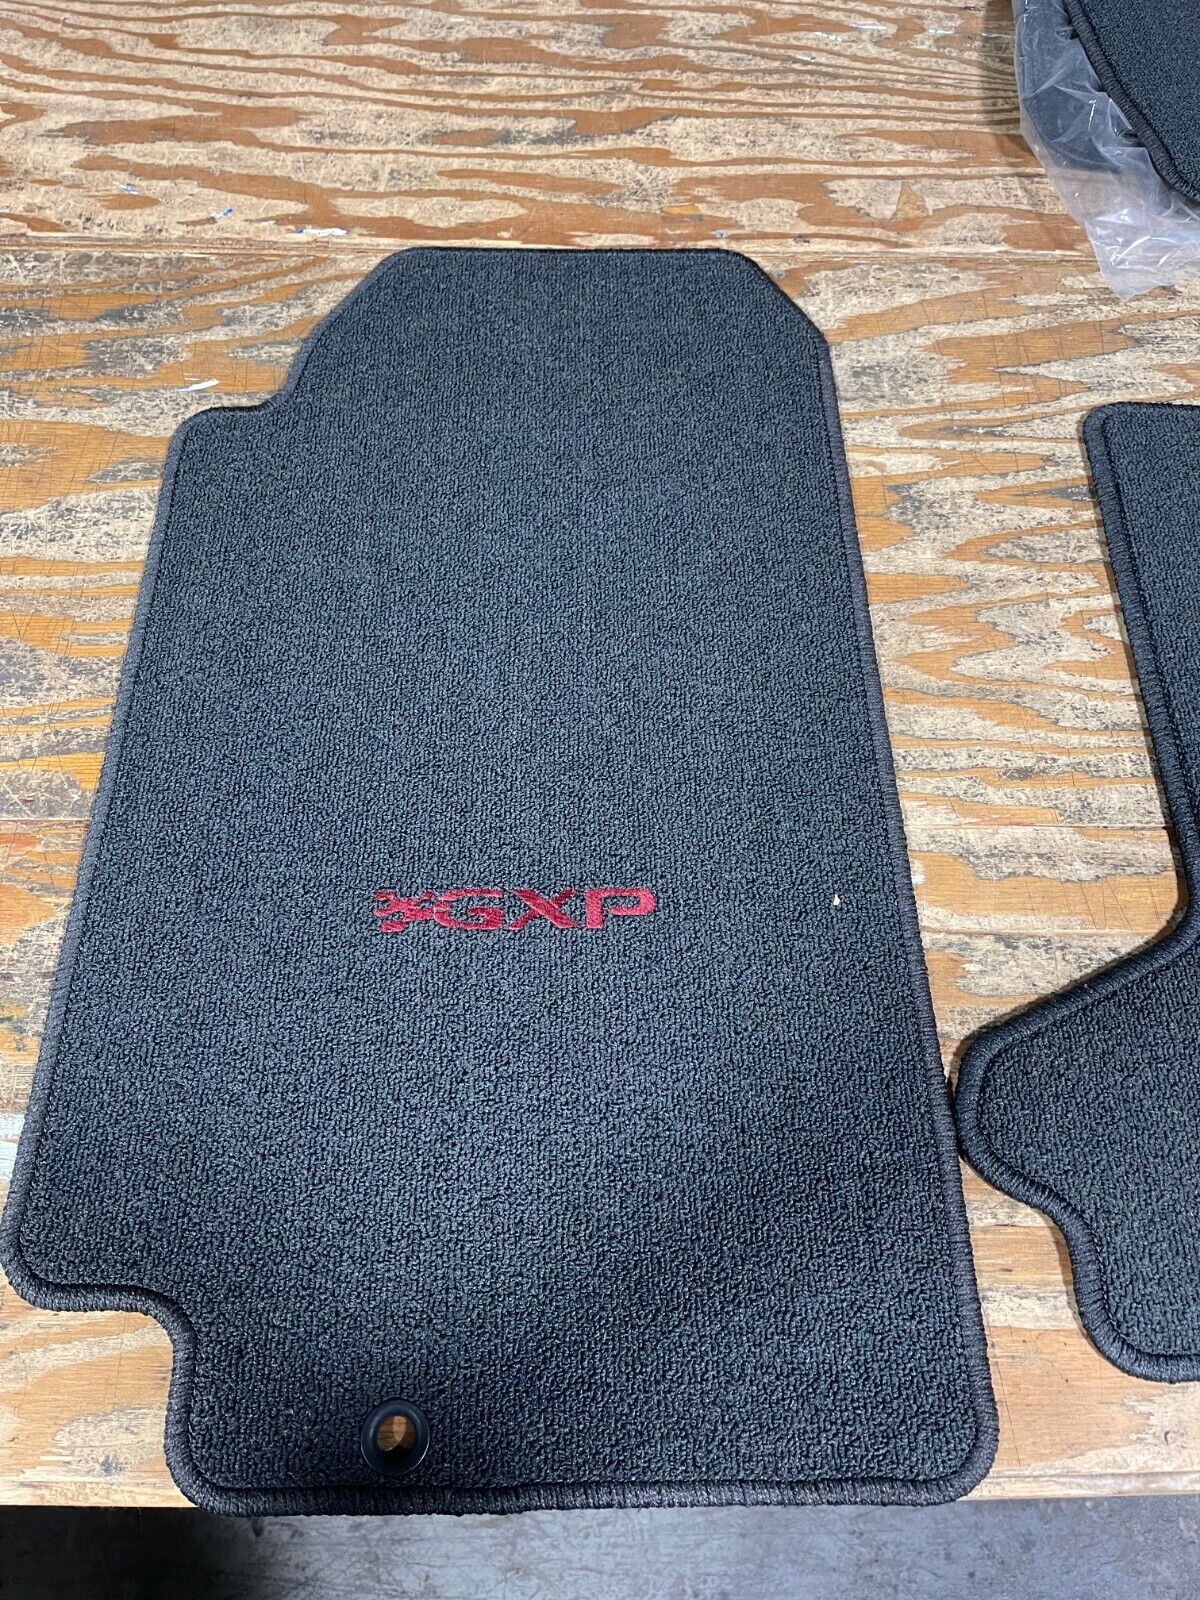 New 2006-2009 OEM Pontiac Solstice Front Floor Mat Set Black With Red GXP Logo